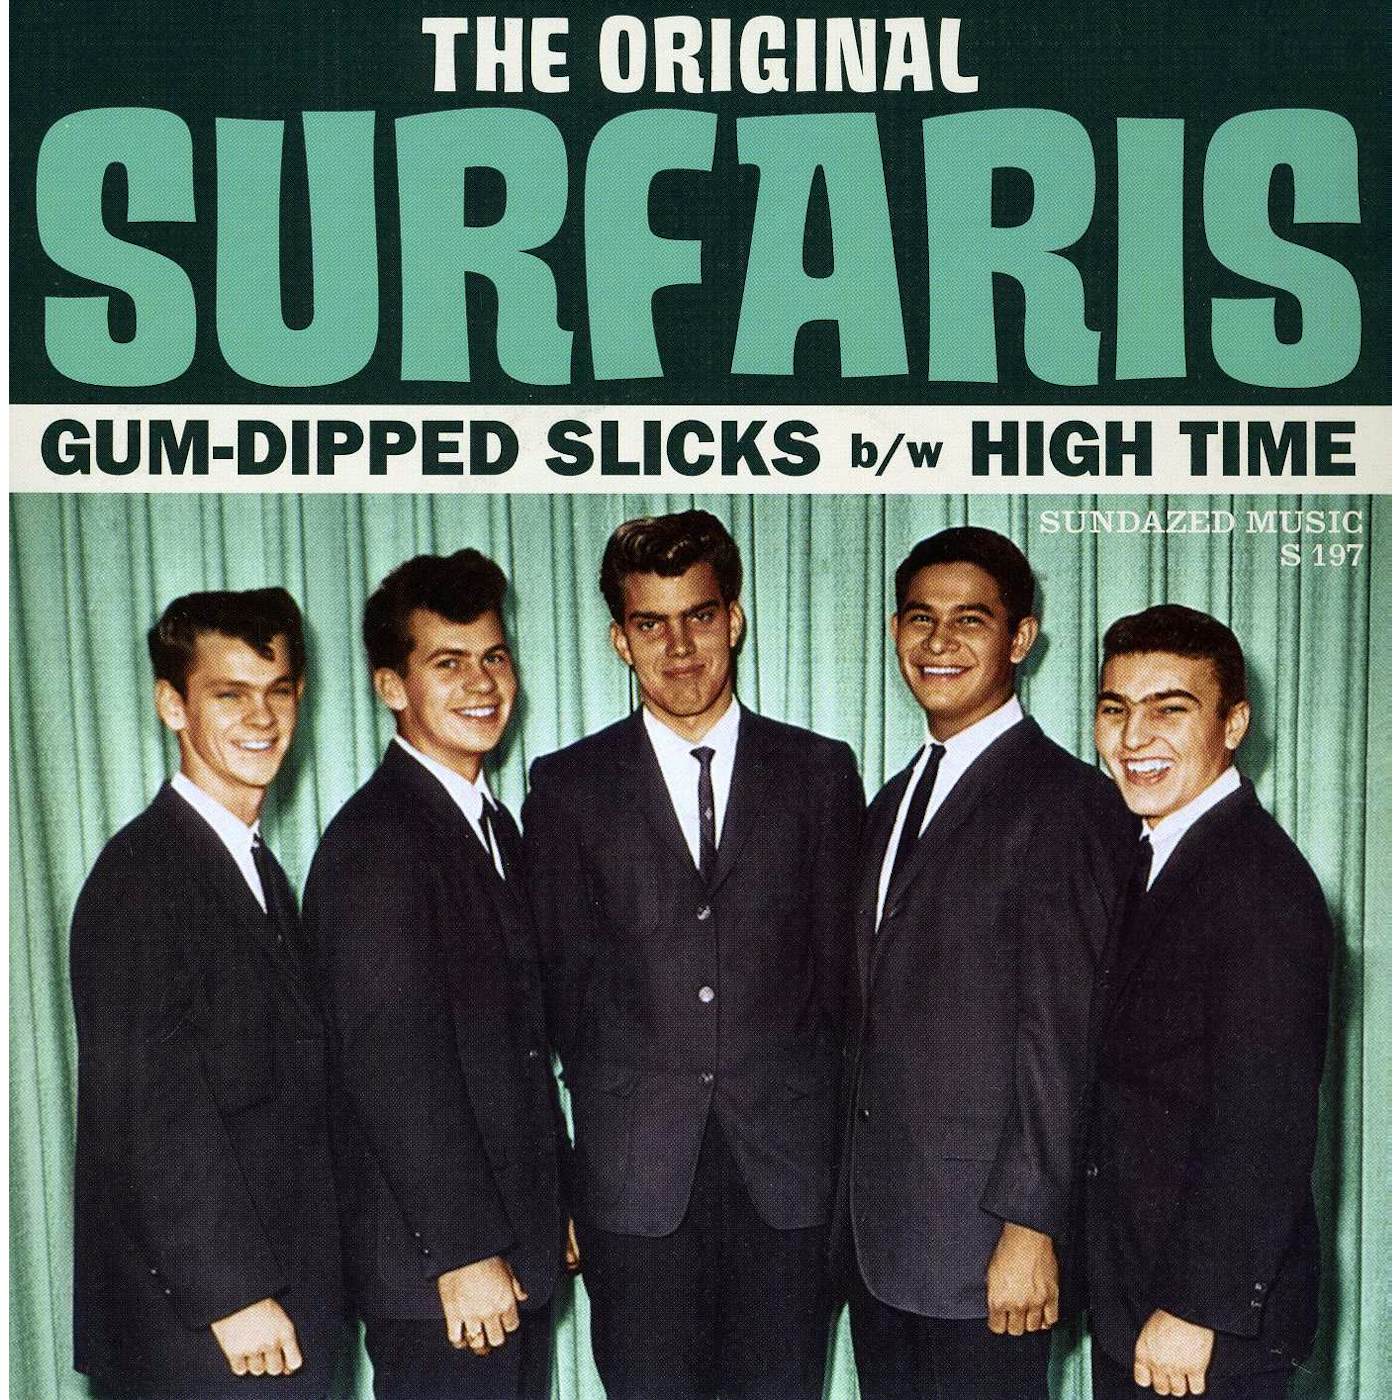 The Original Surfaris GUM-DIPPED SLICKS/HIGH TIME Vinyl Record